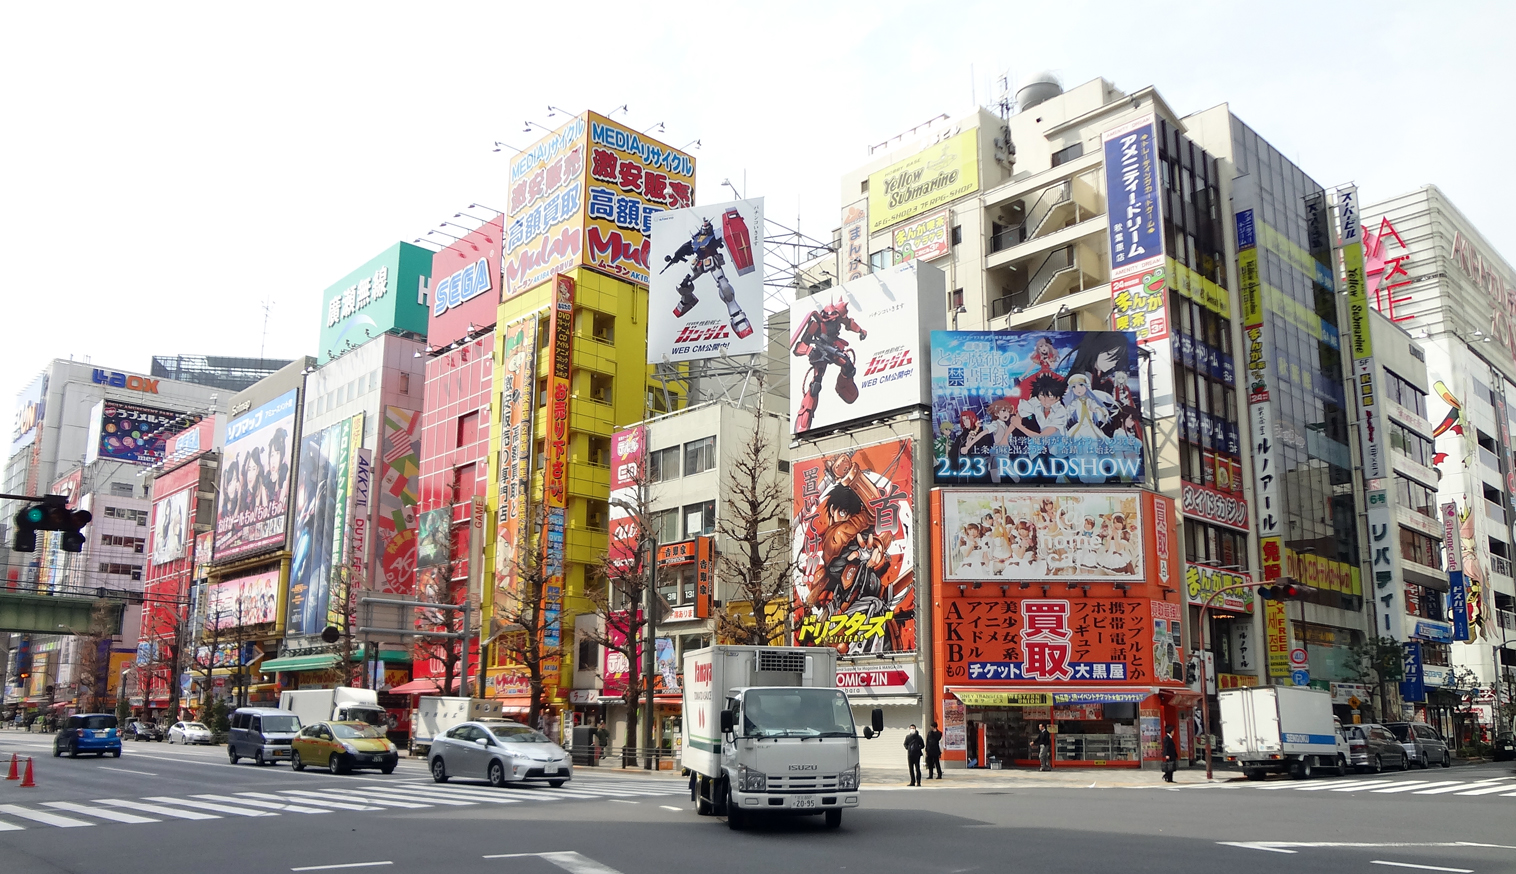 The Time Square corner of Akihabara